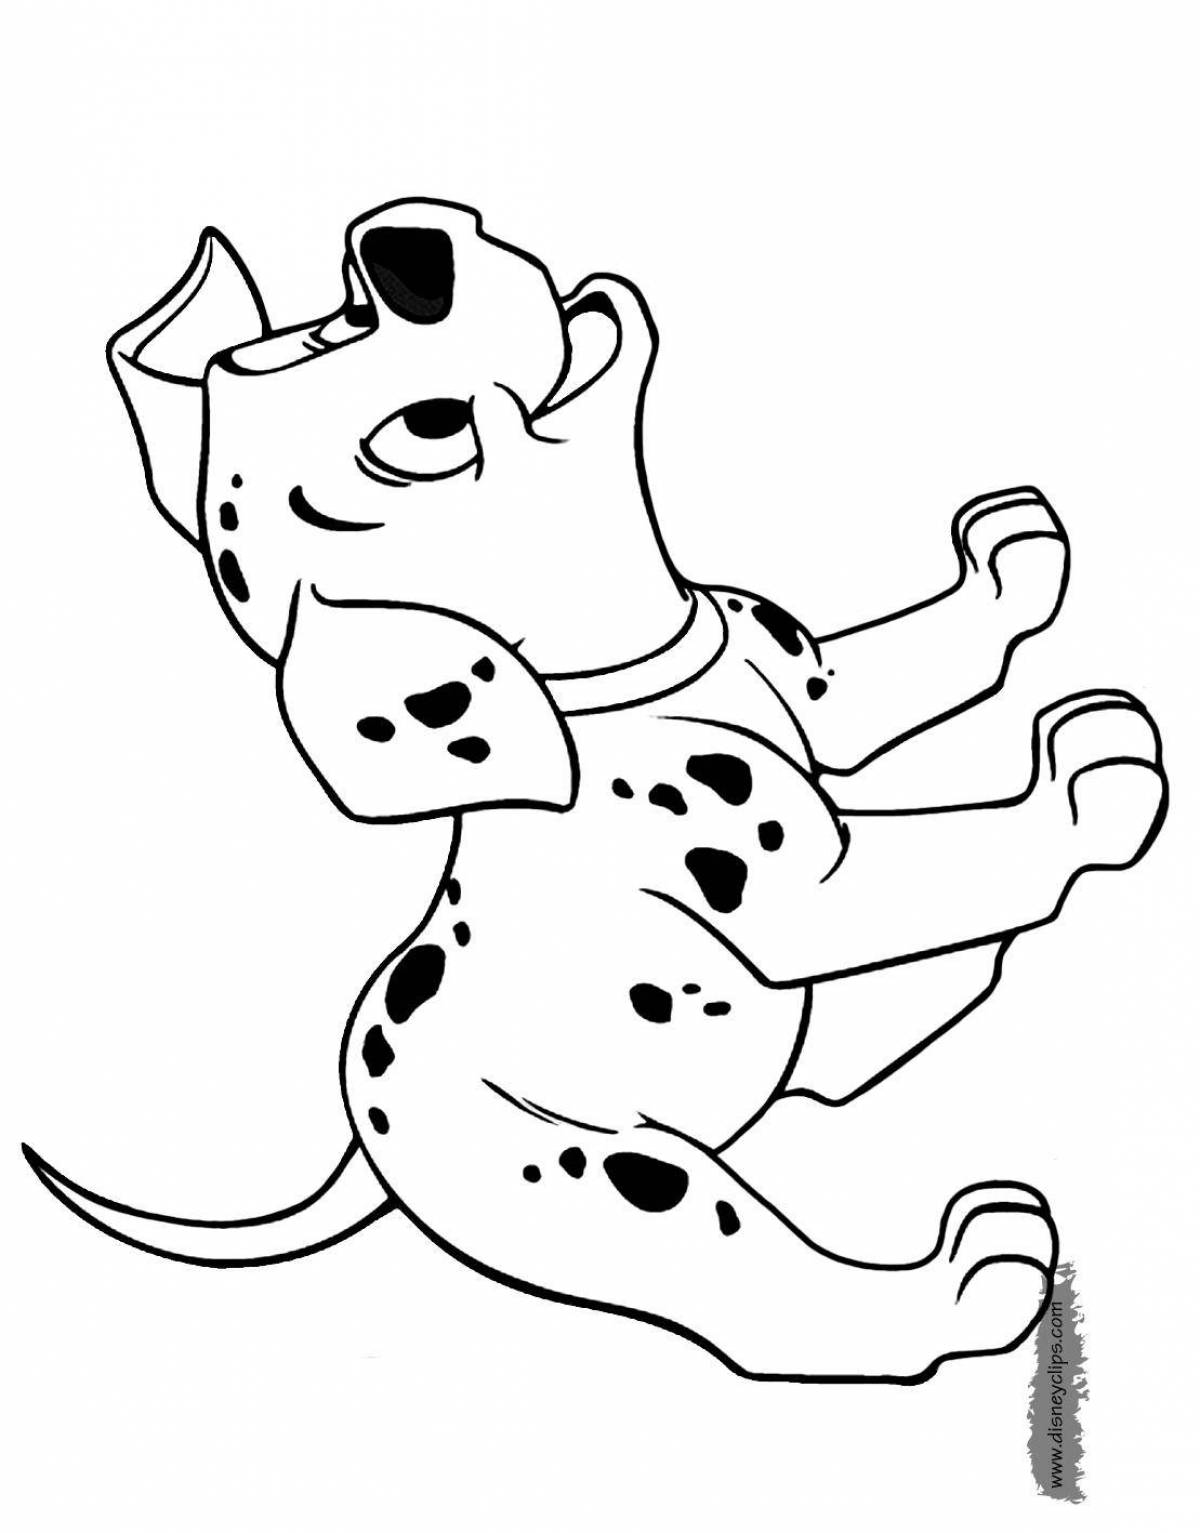 Coloring page cute dalmatian dog